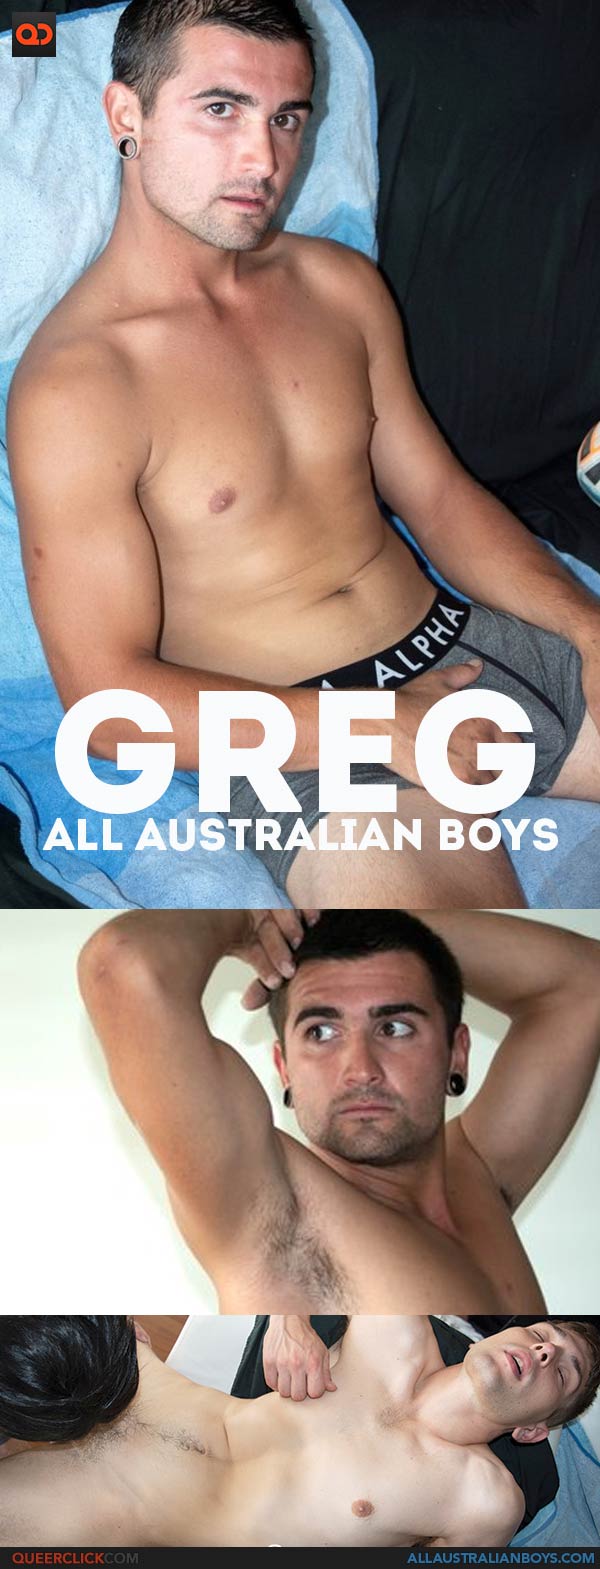 All Australian Boys: Greg